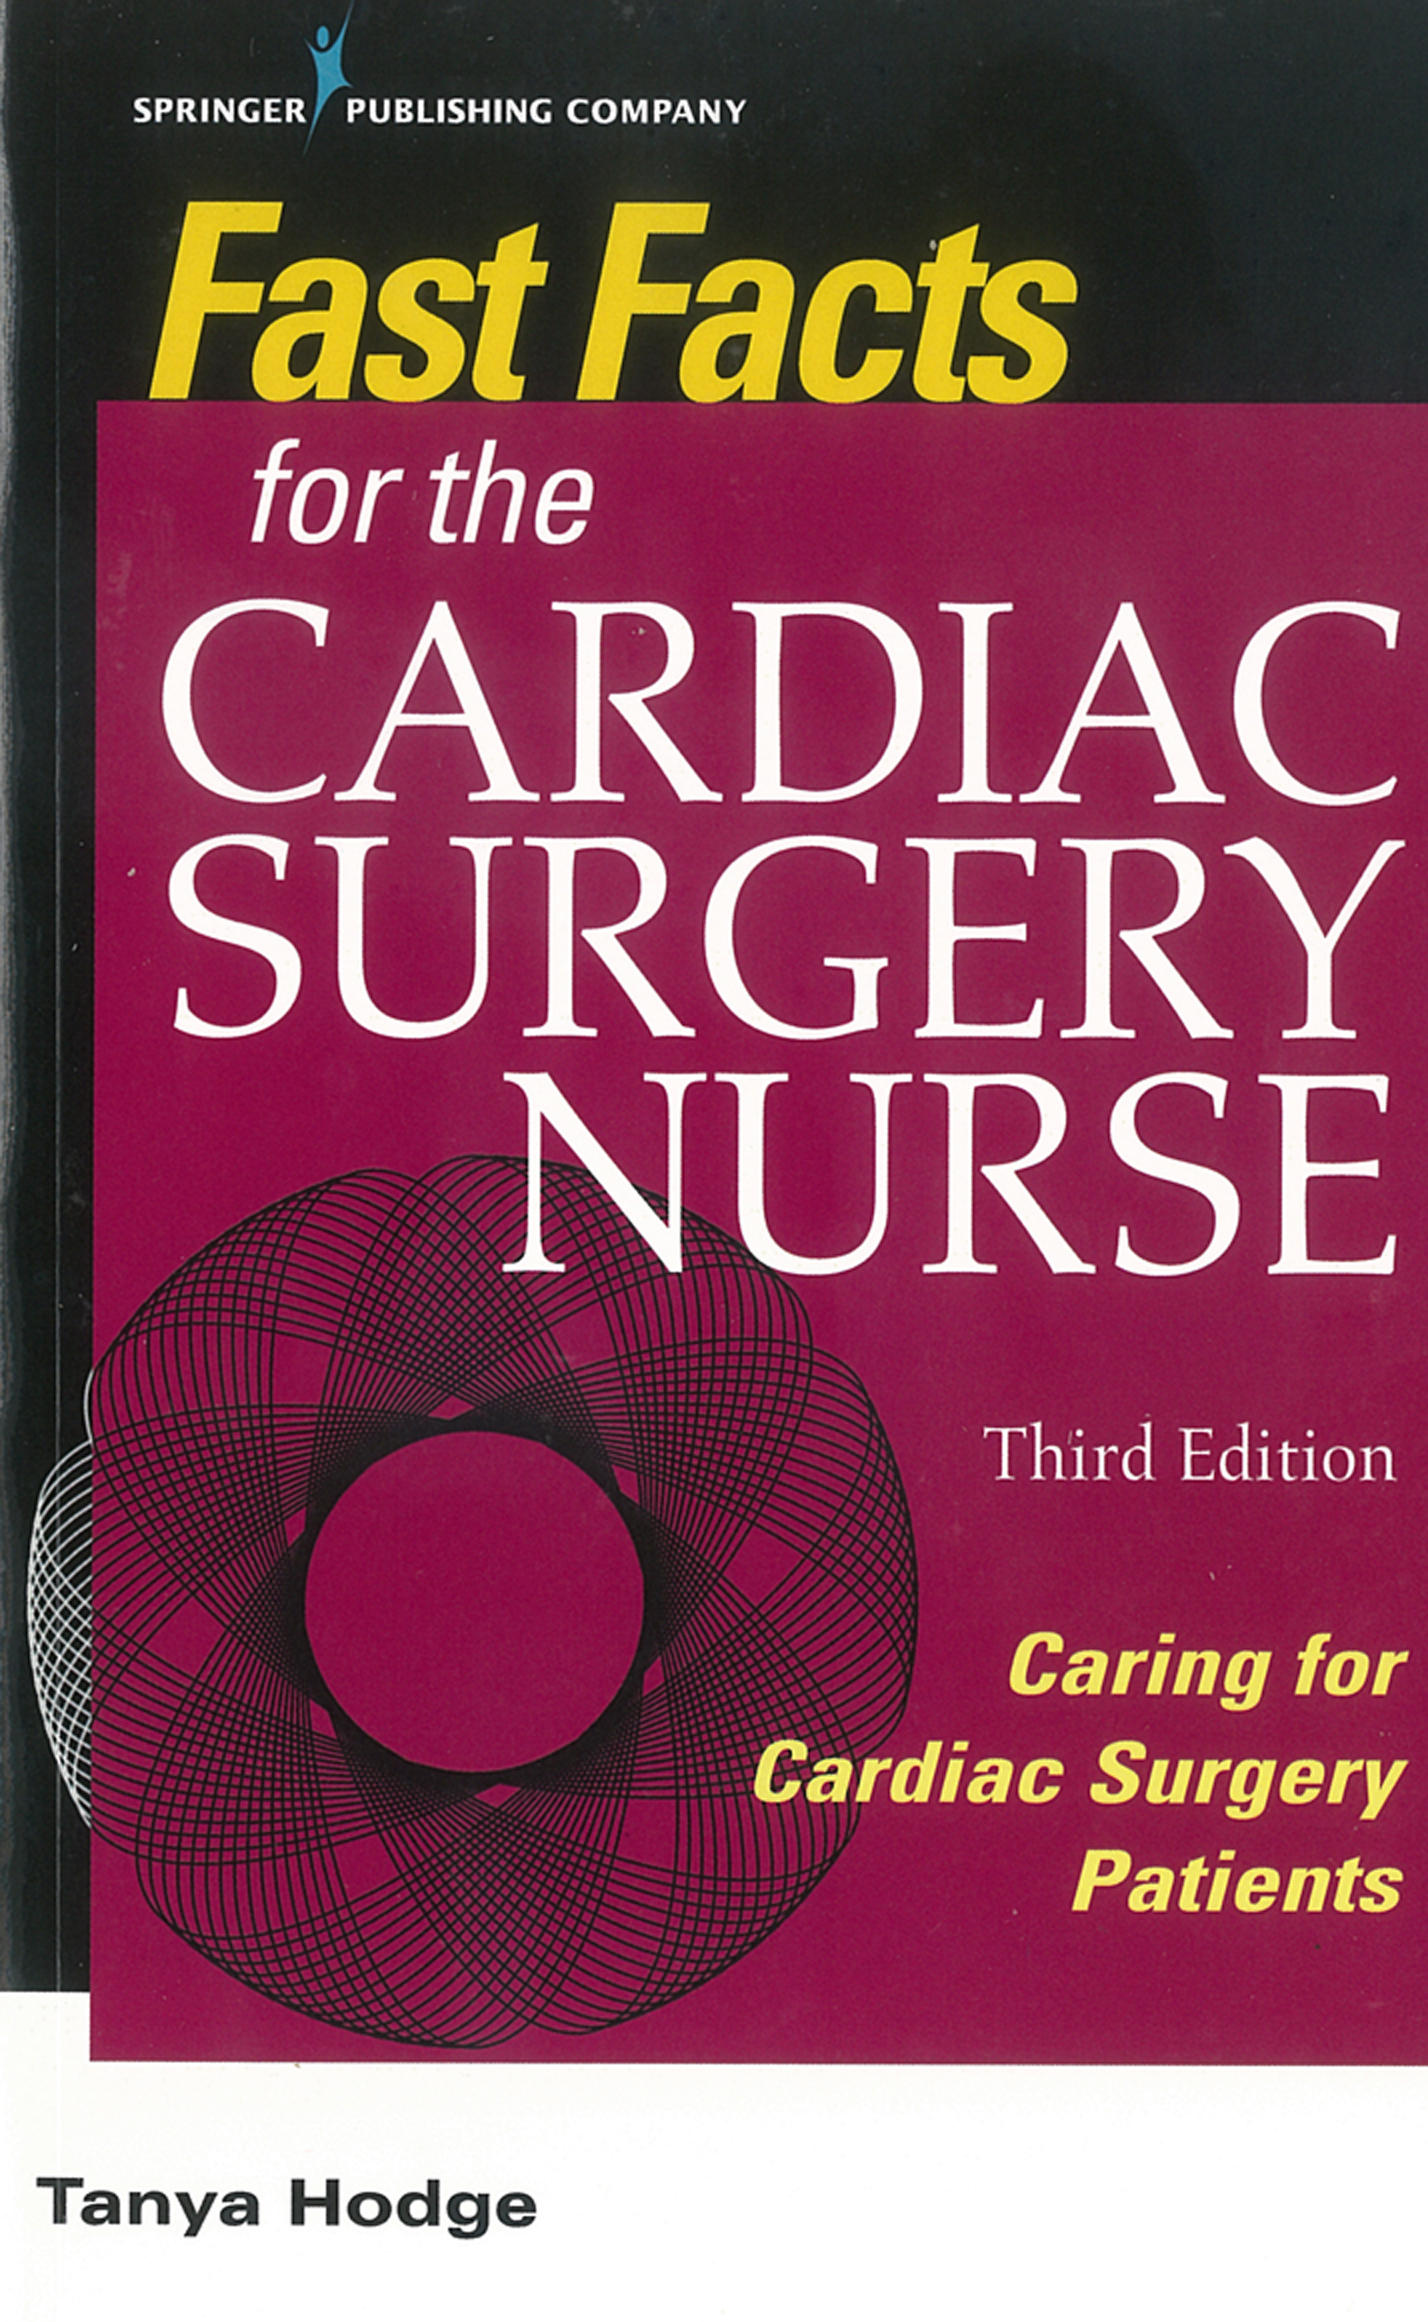 Fast Facts for the Cardiac Surgery Nurse, 3rd Ed.